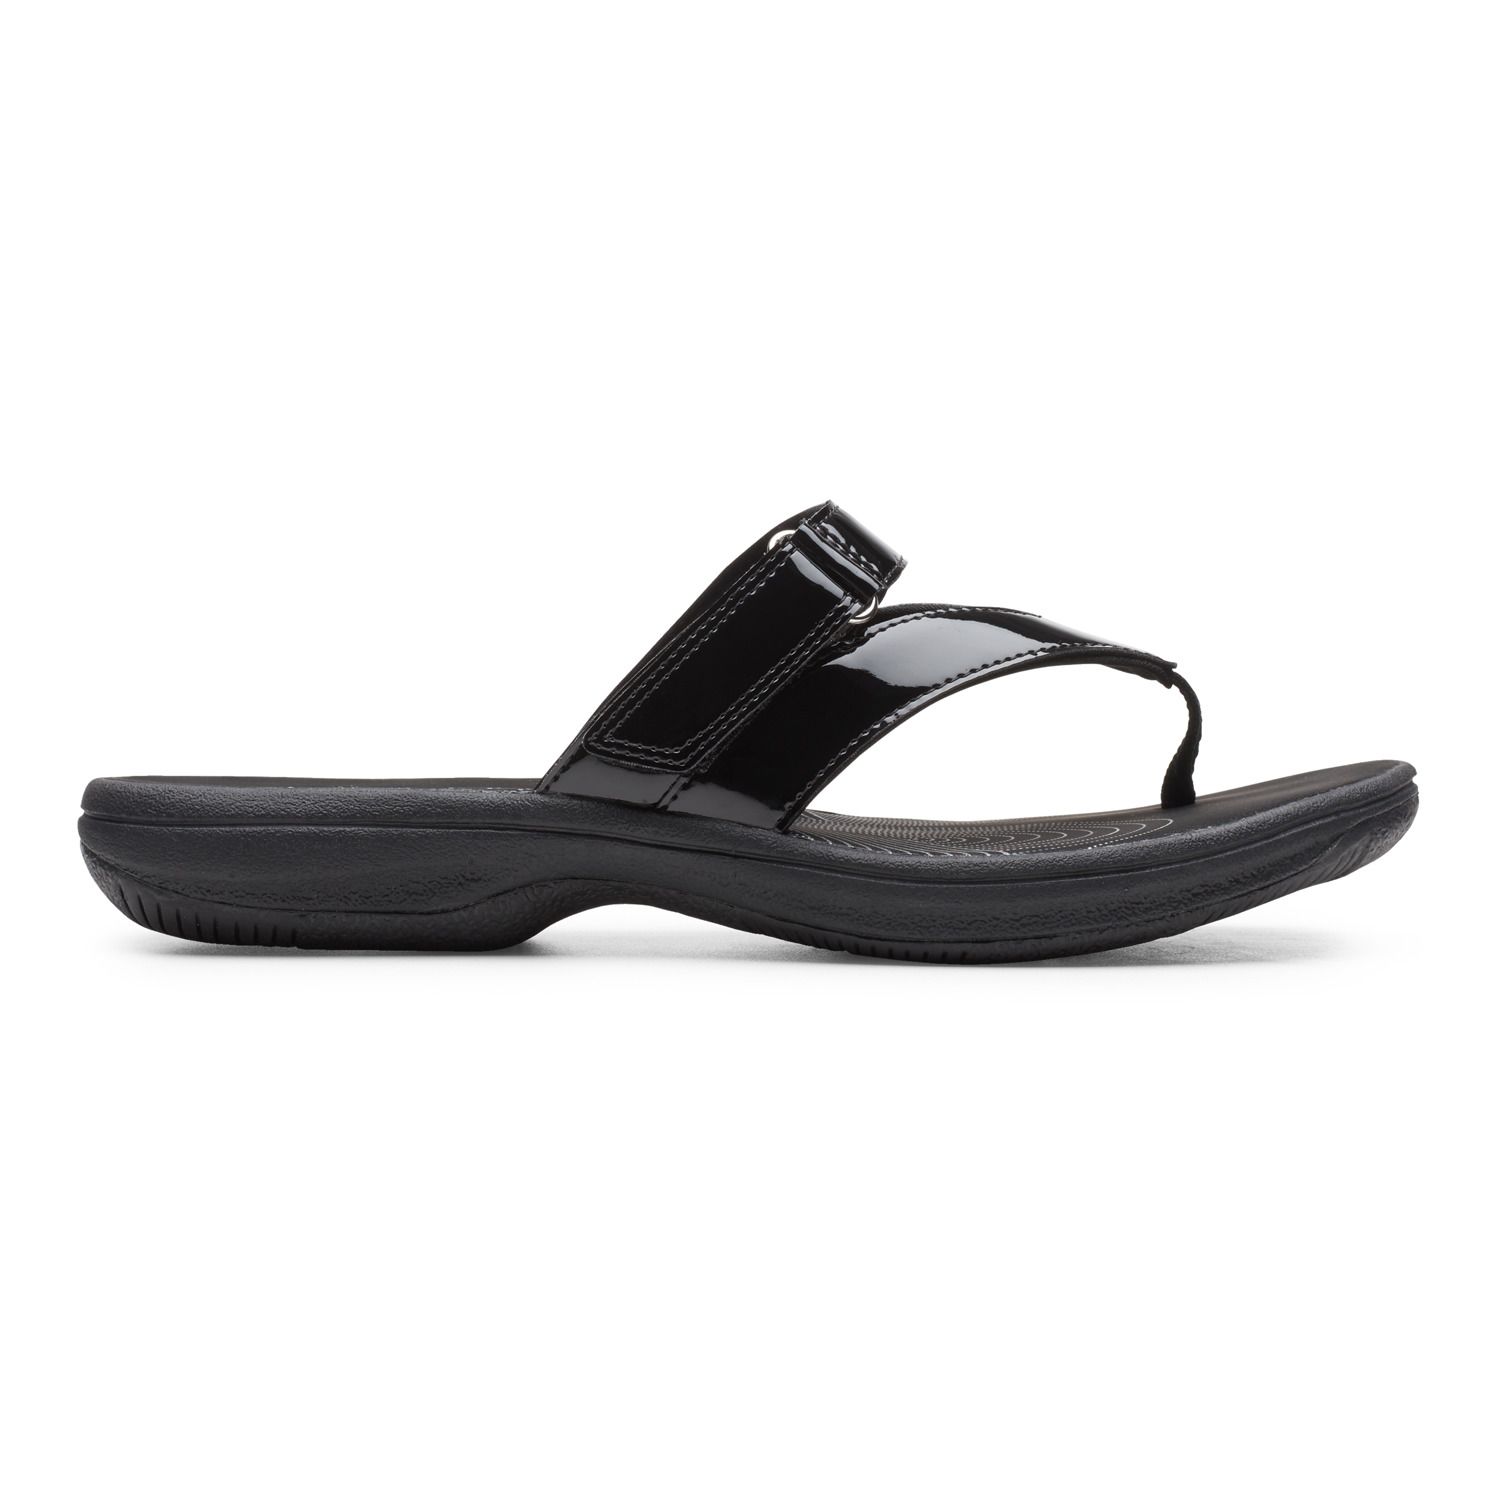 clarks black patent sandals